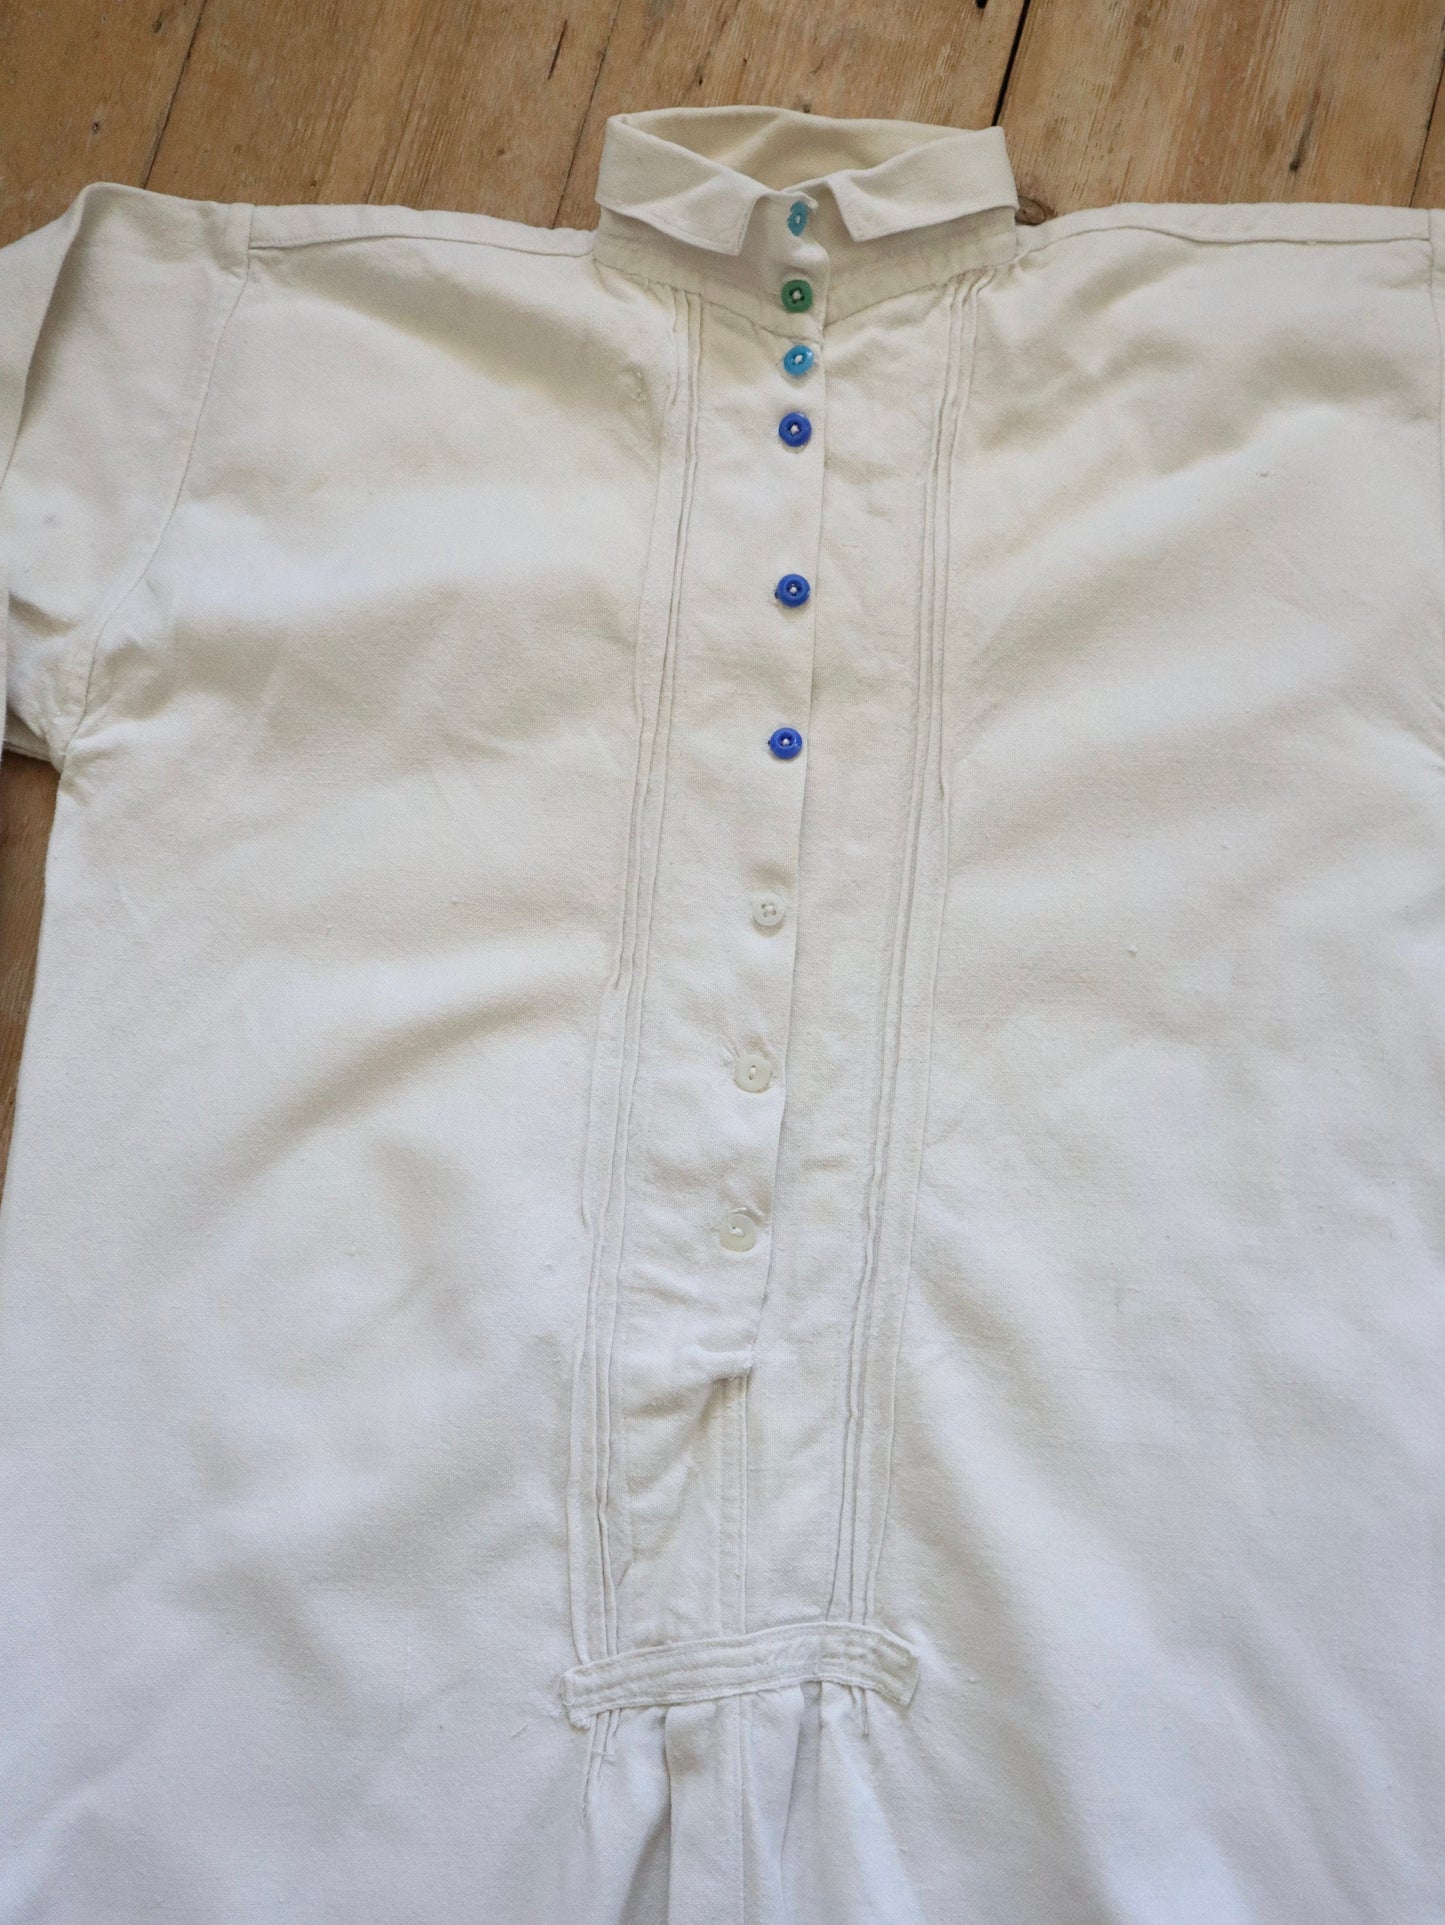 1940s Romanian White Linen Folk Shirt Traditional Costume Transylvania